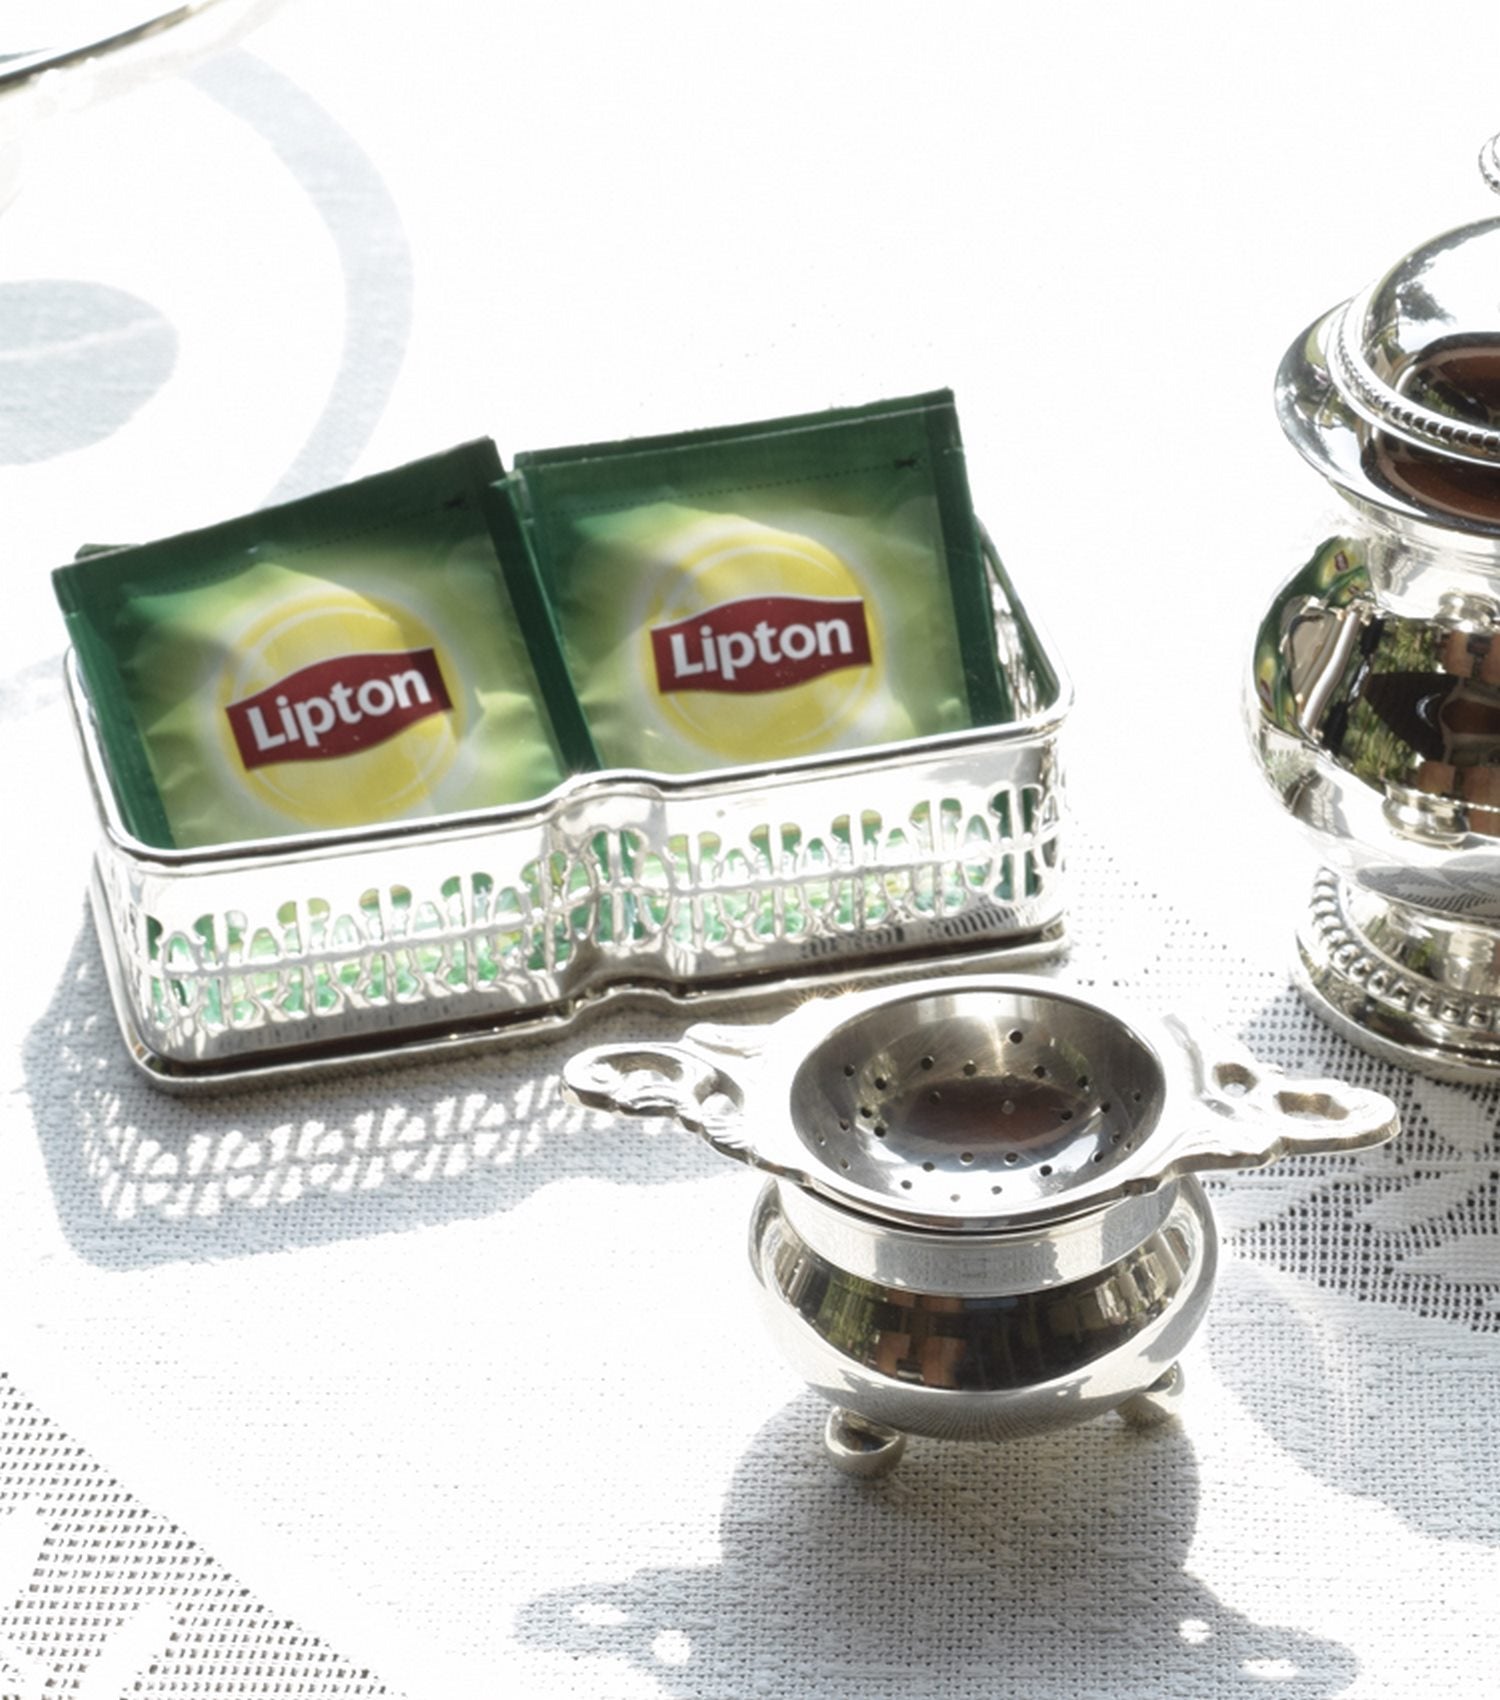 Windsor tea strainer